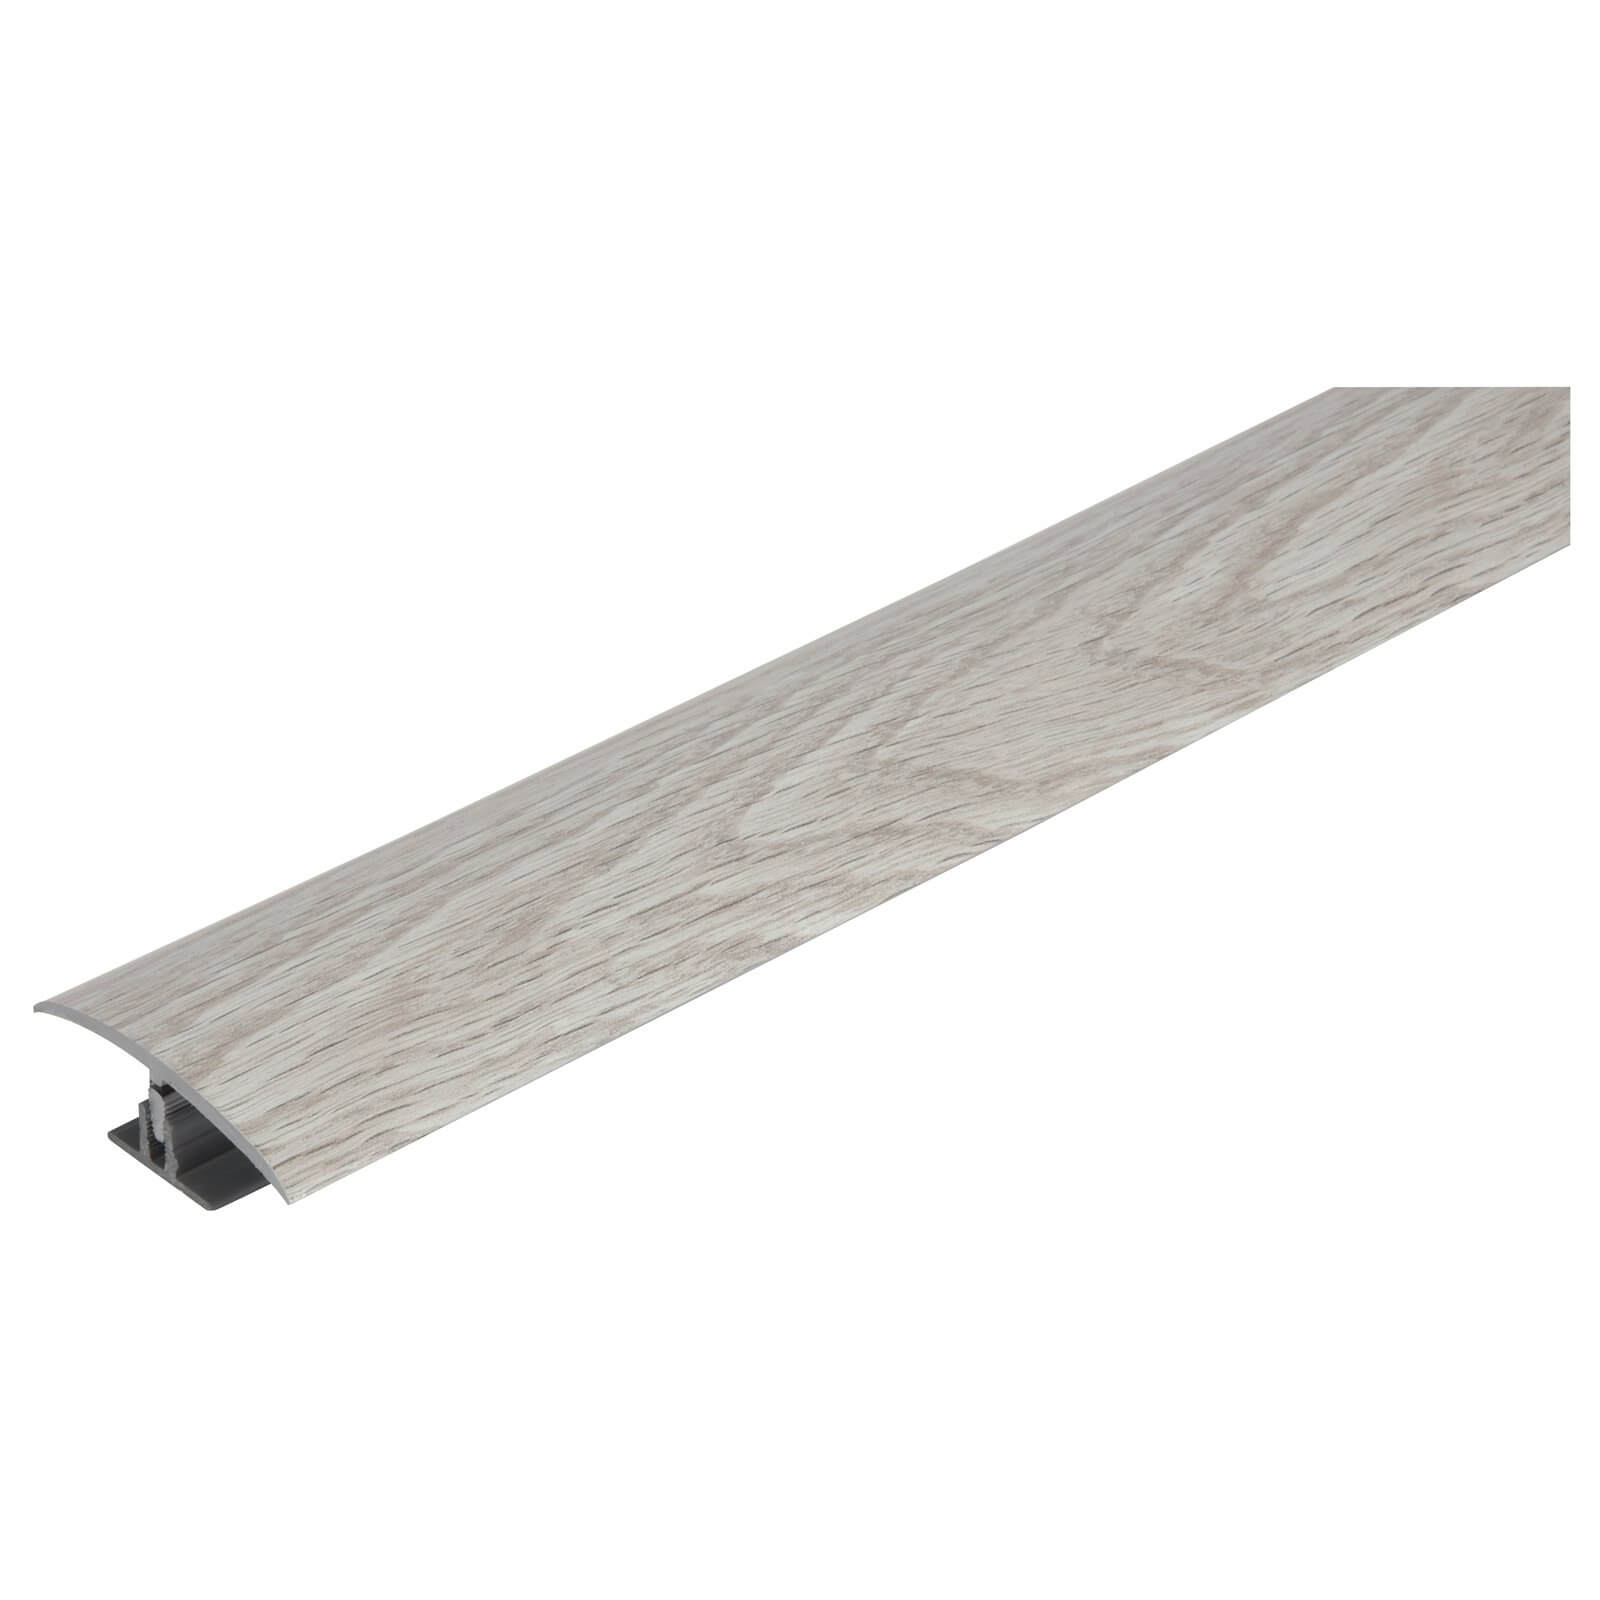 Photo of Variable Height Flooring Threshold - Light Grey 1.8m X 50mm